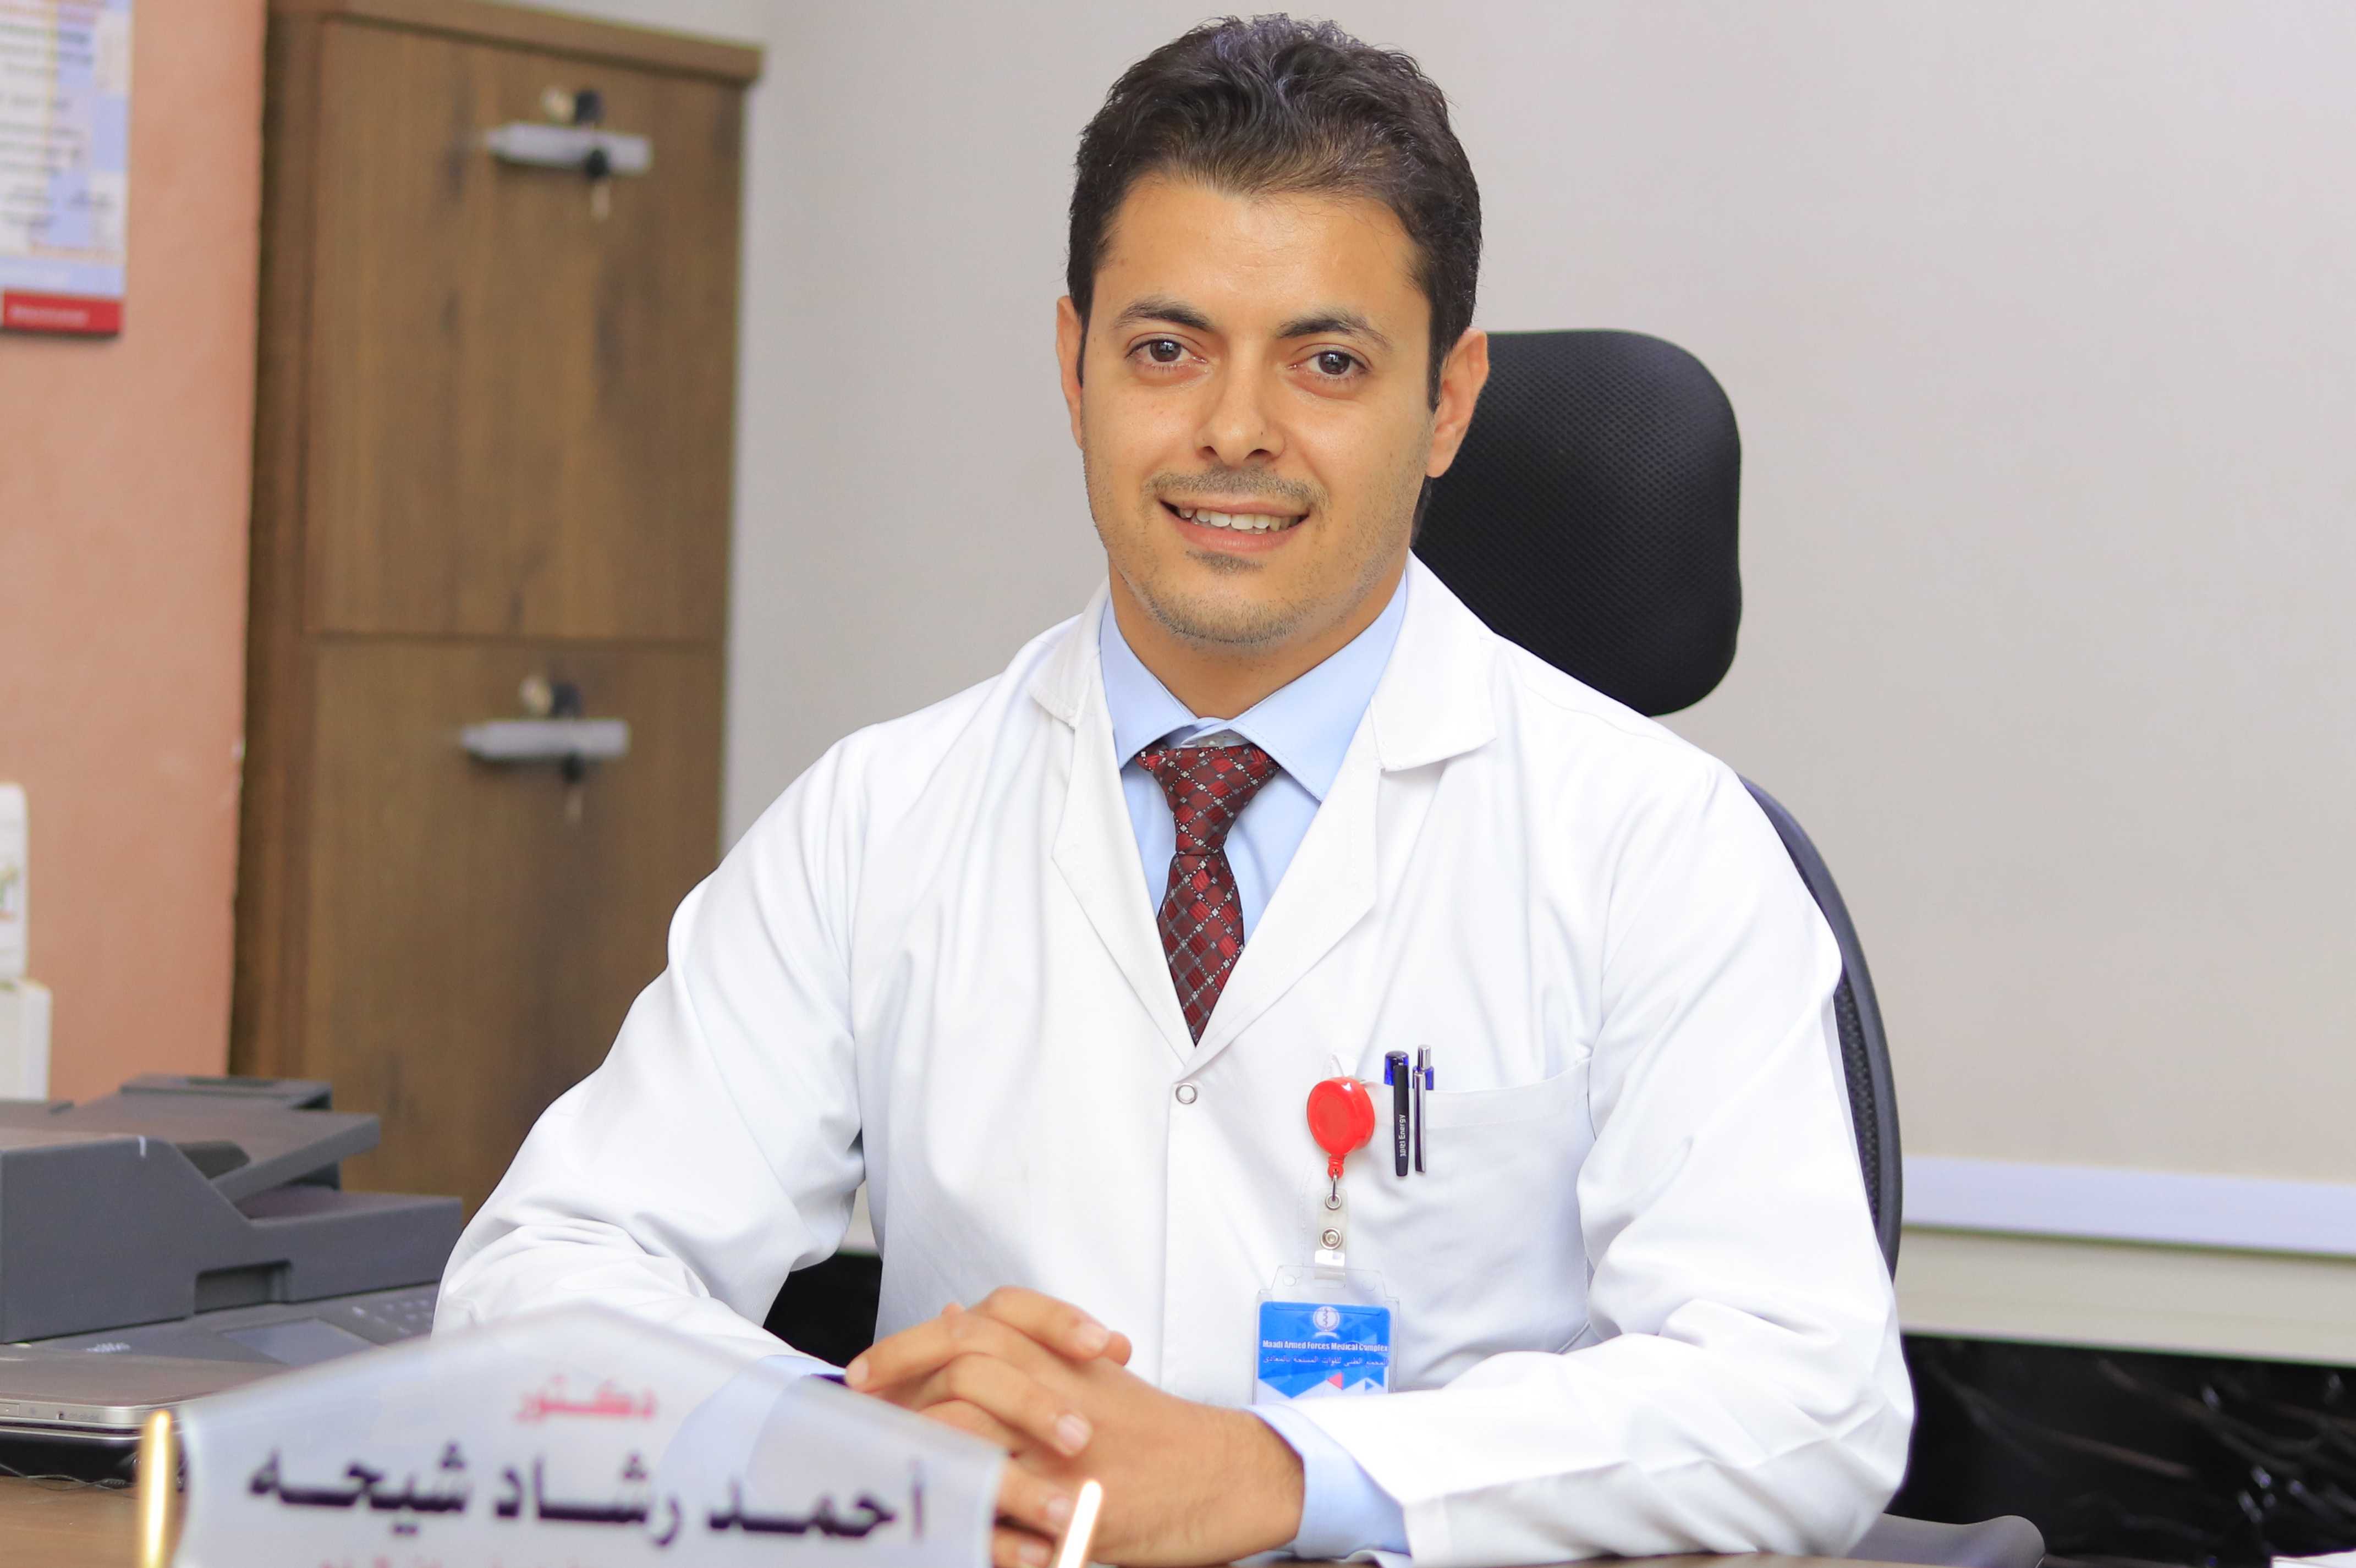 Dr. Ahmed Shiha